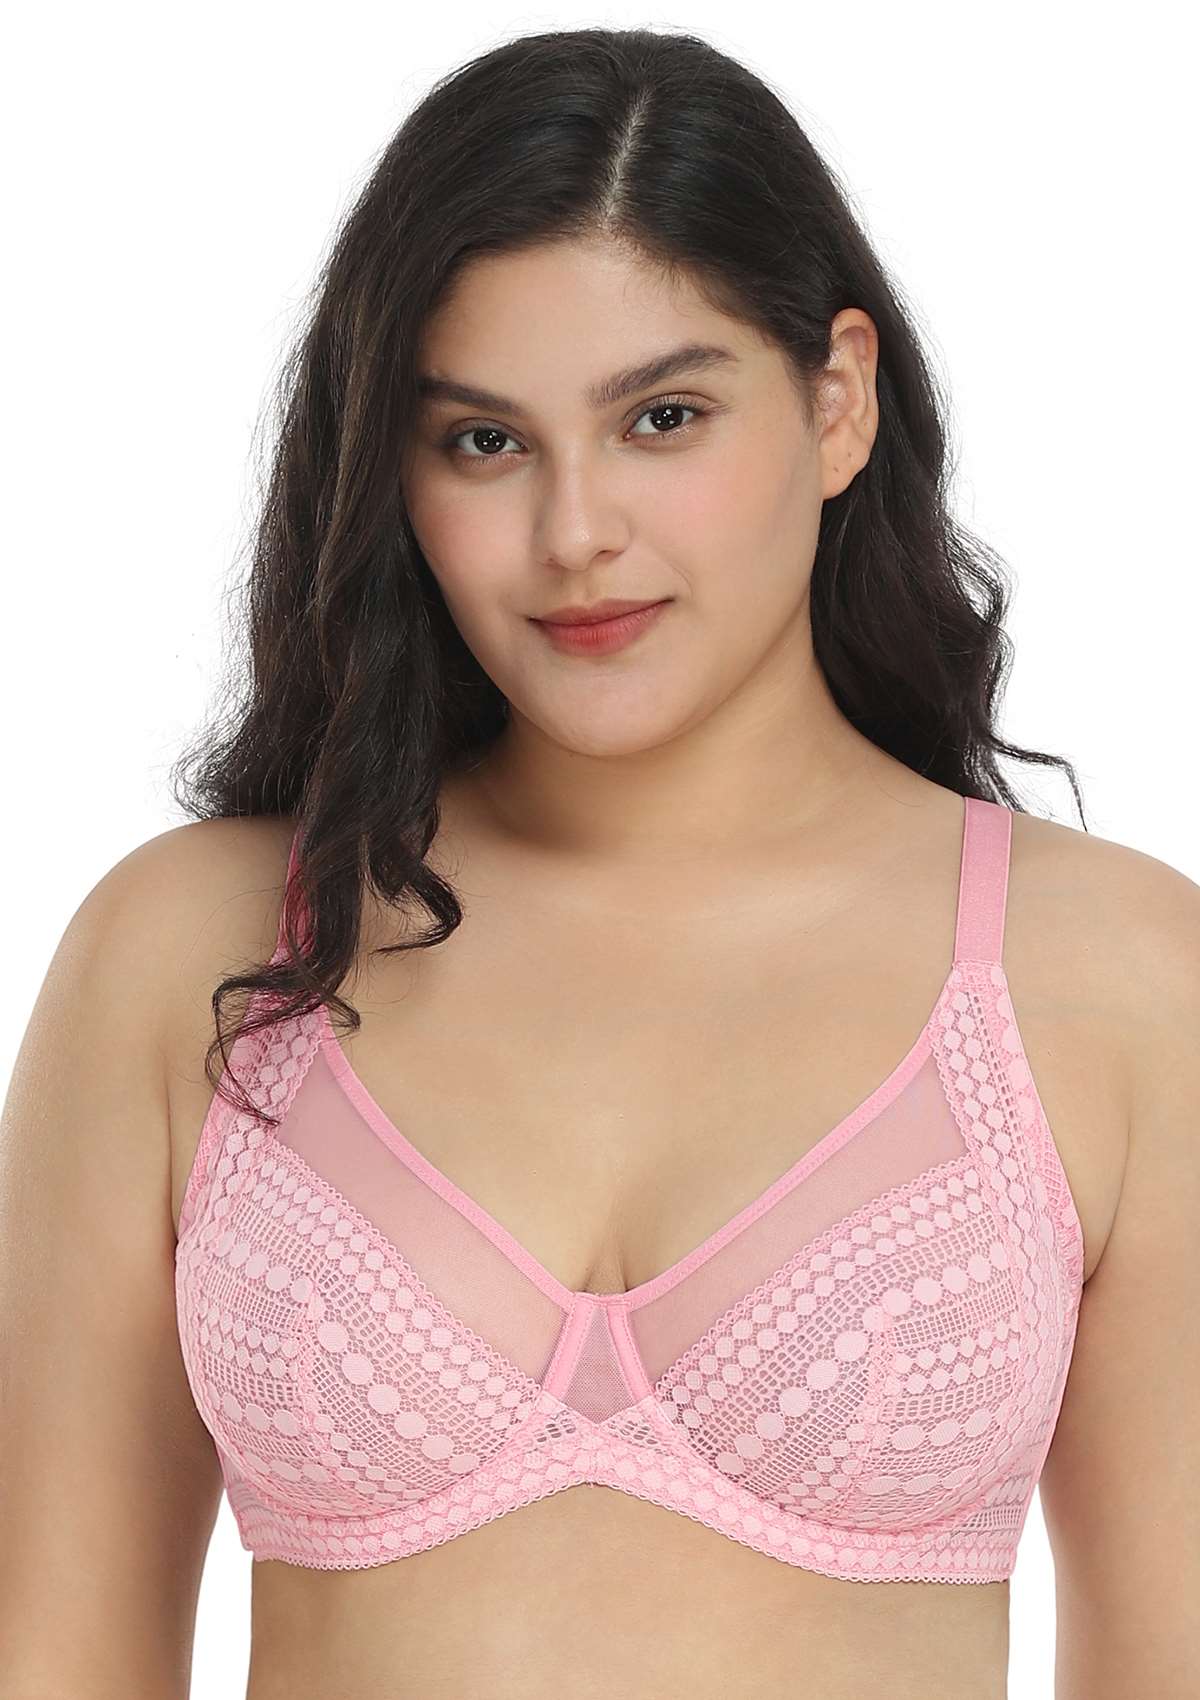 HSIA Heroine Lace Unlined Bra: Bra That Hides Back Fat - Plus Size - Pink / 38 / DD/E